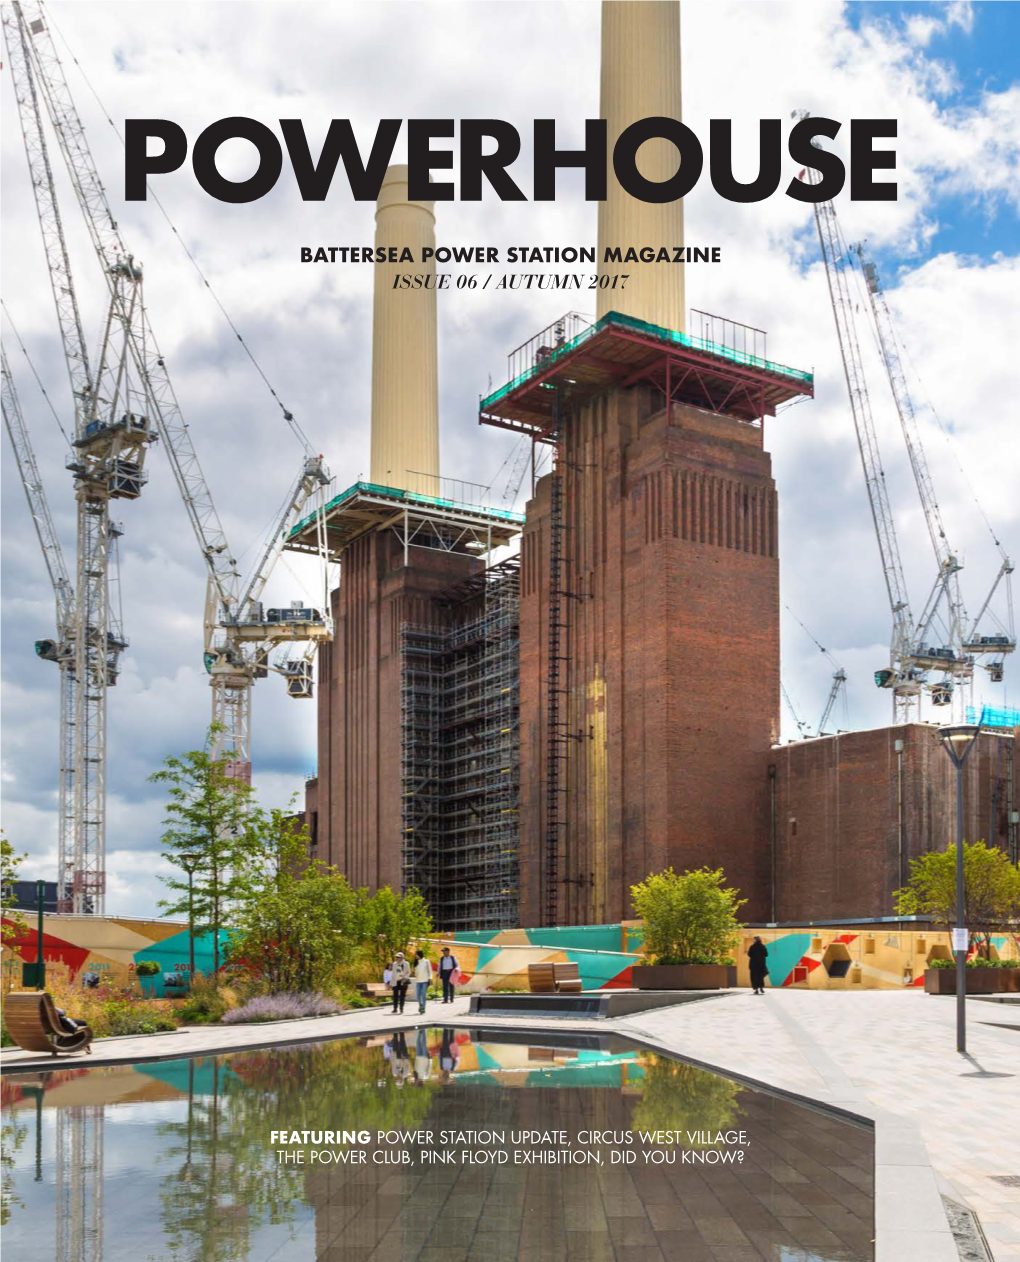 Battersea Power Station Magazine Issue 06 / Autumn 2017